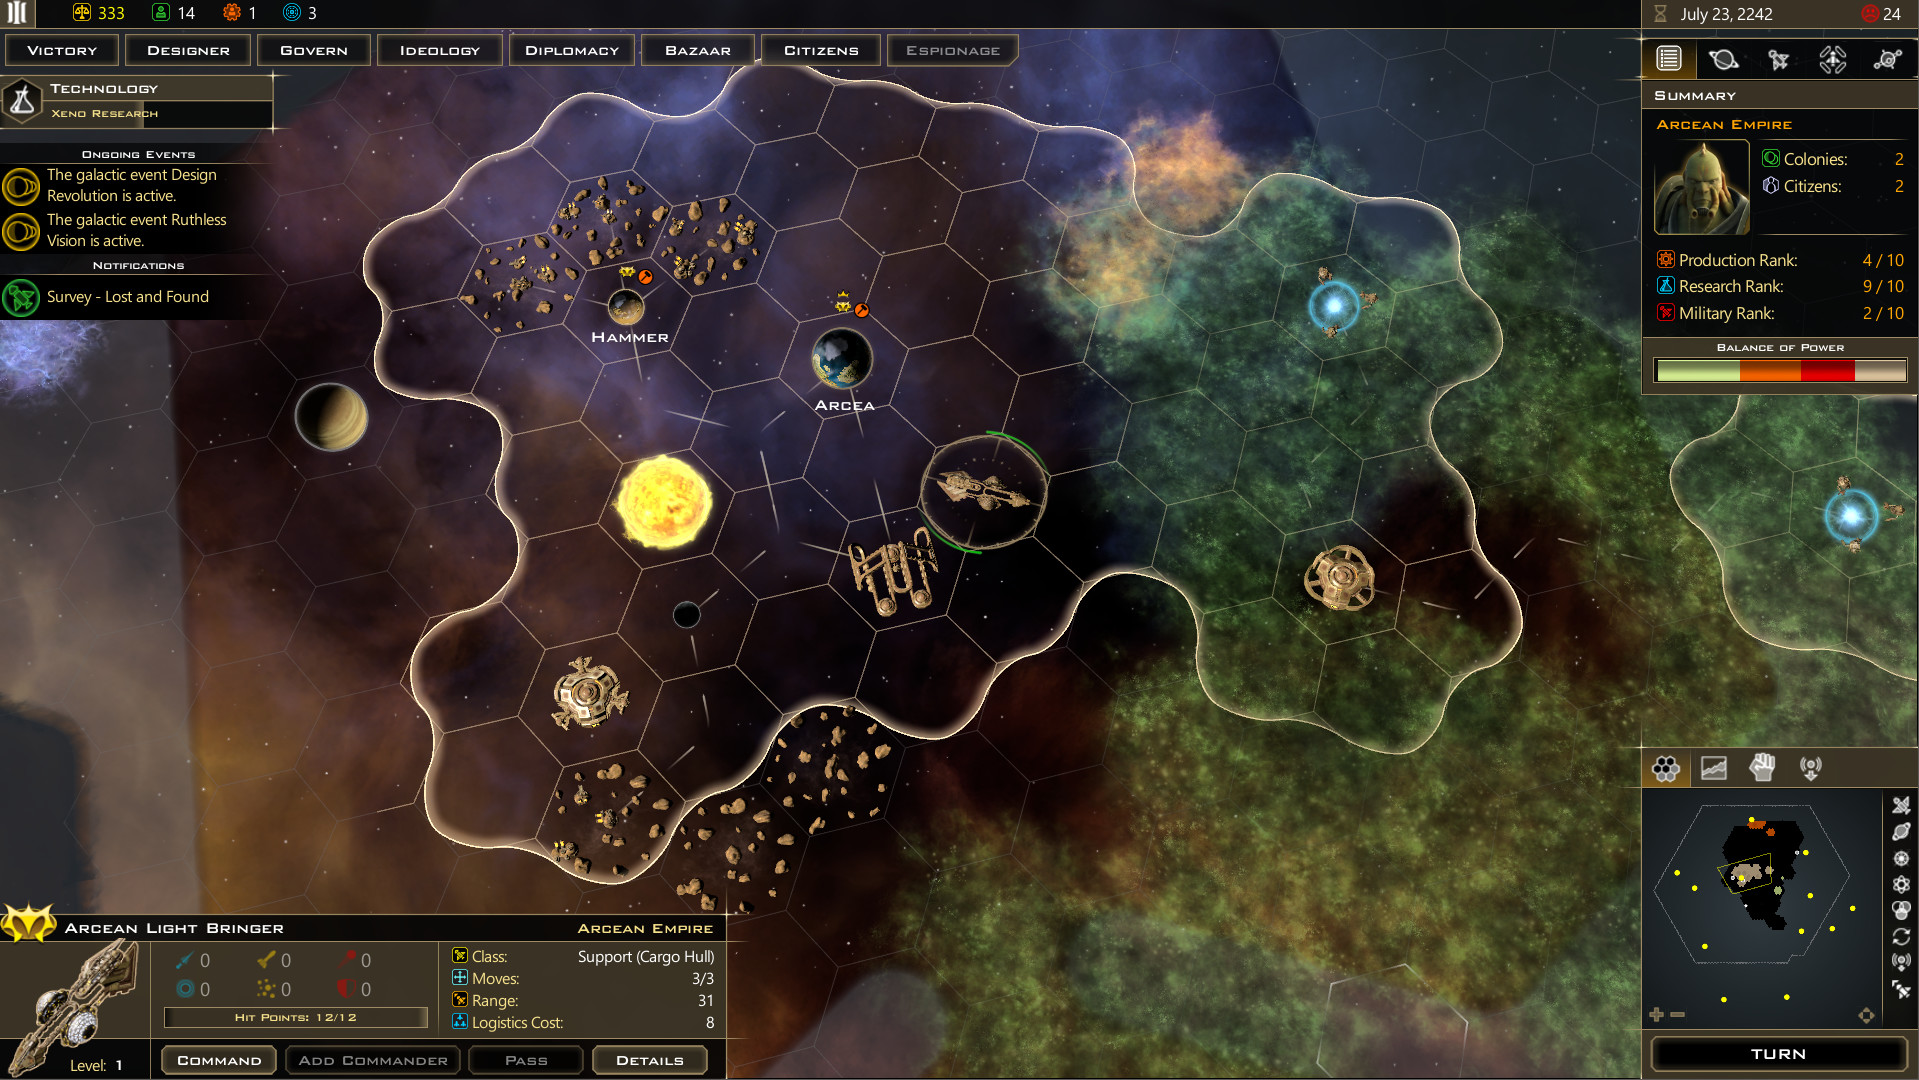 Galactic Civilizations III: Crusade Expansion Pack Featured Screenshot #1